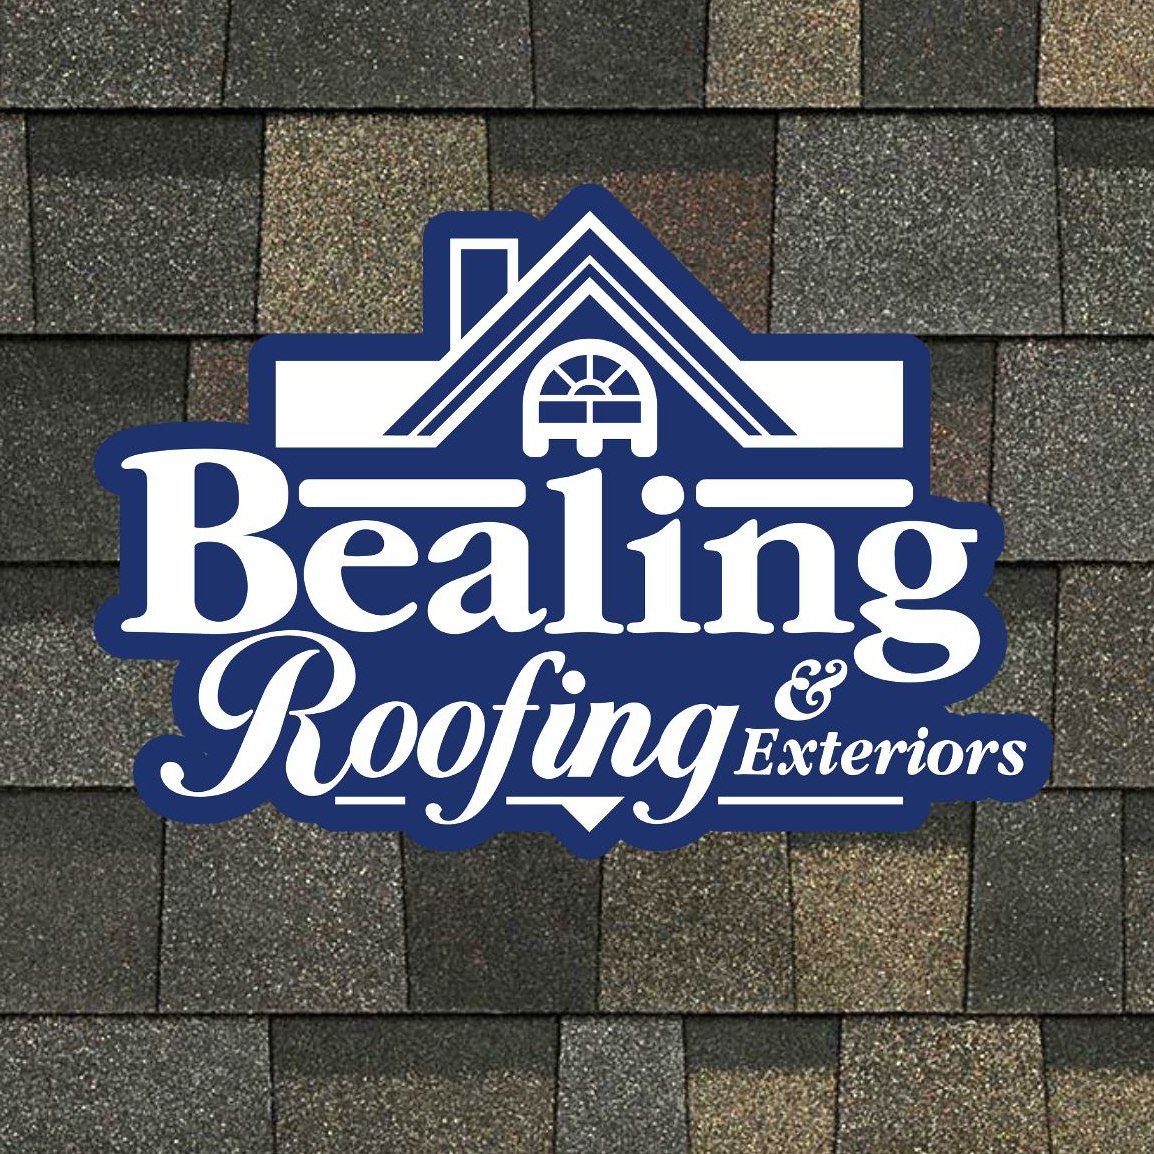 Bealing-Roofing-And-Exteriors-Hanover-PA-17331.jpg